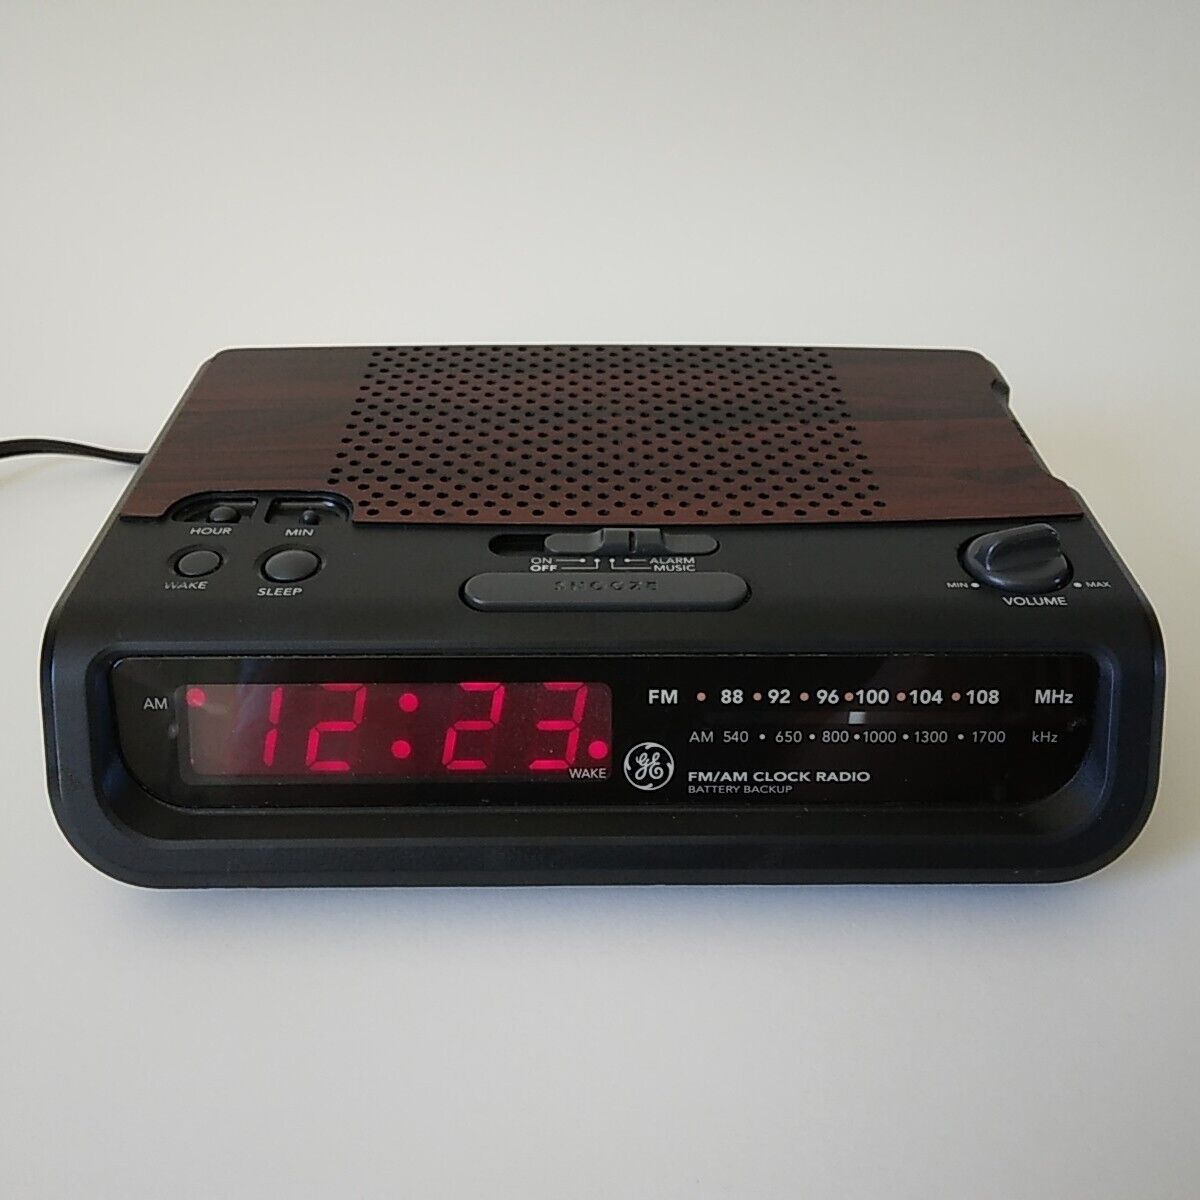 GE Alarm Clock Model: 7-4613A-AM/FM-Corded/Batt.Bkup.-1994-Tested Works